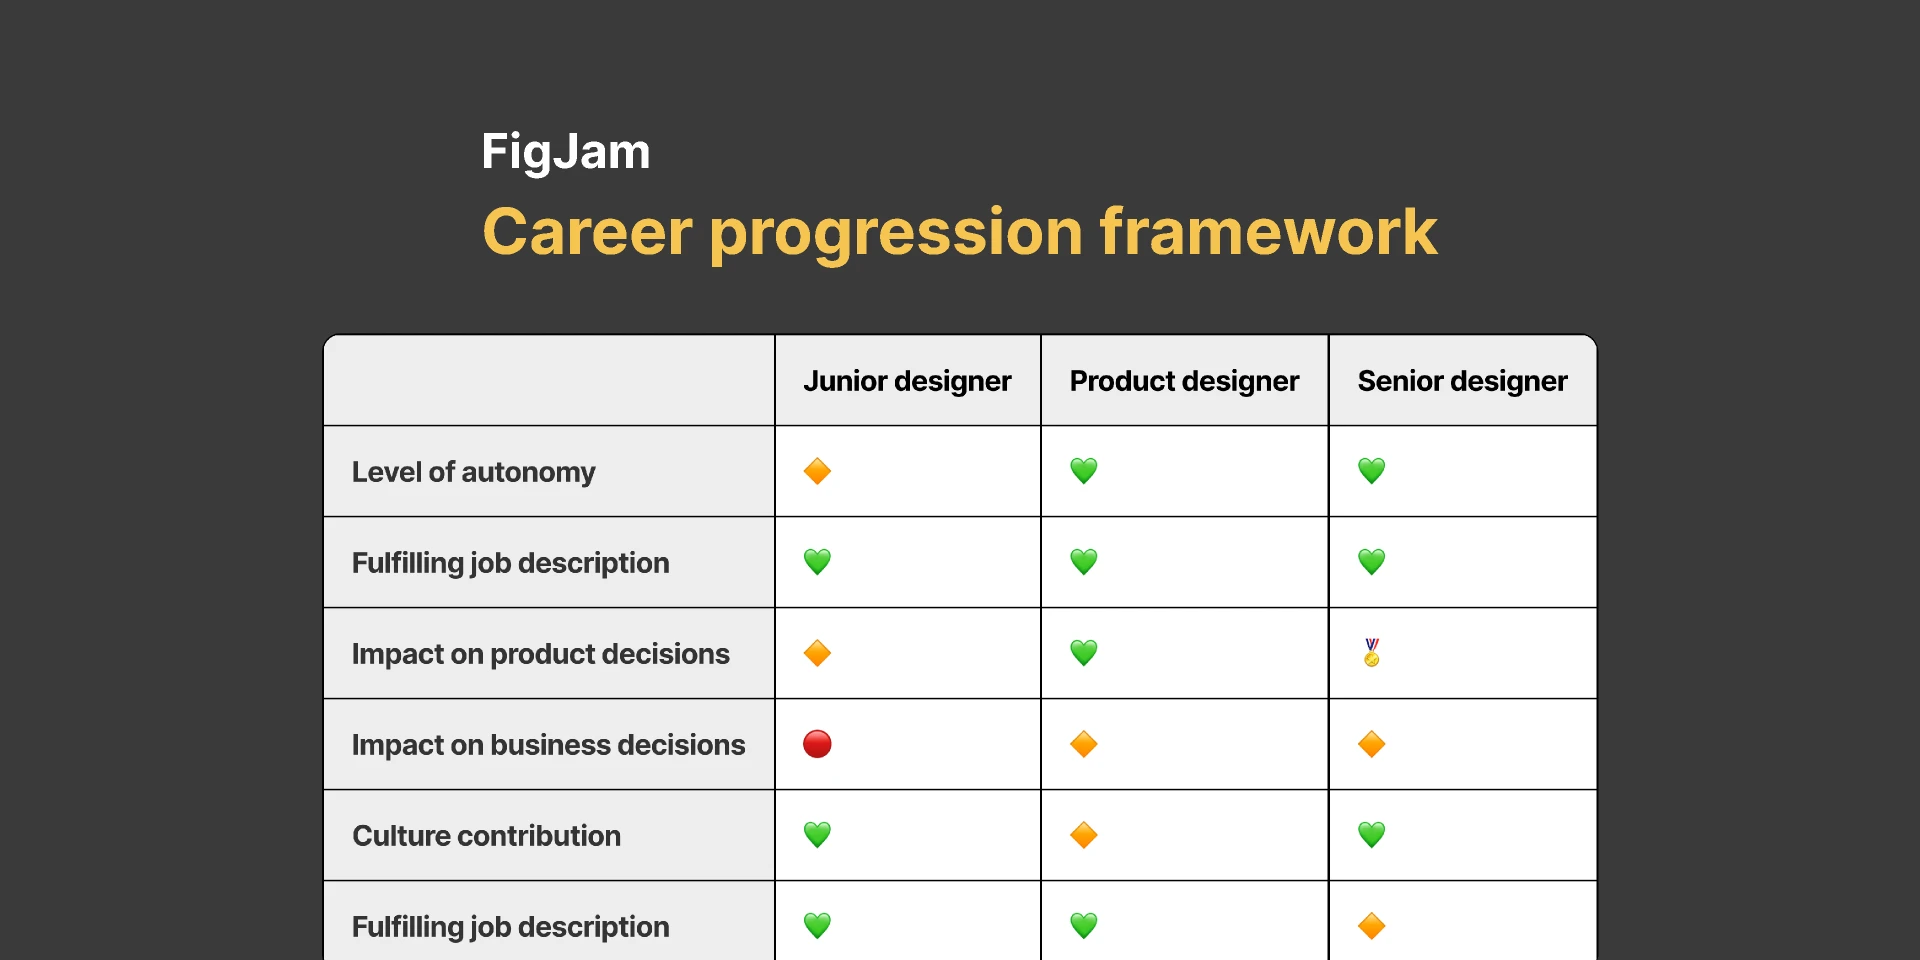 FigJam career progression framework for Figma and Adobe XD